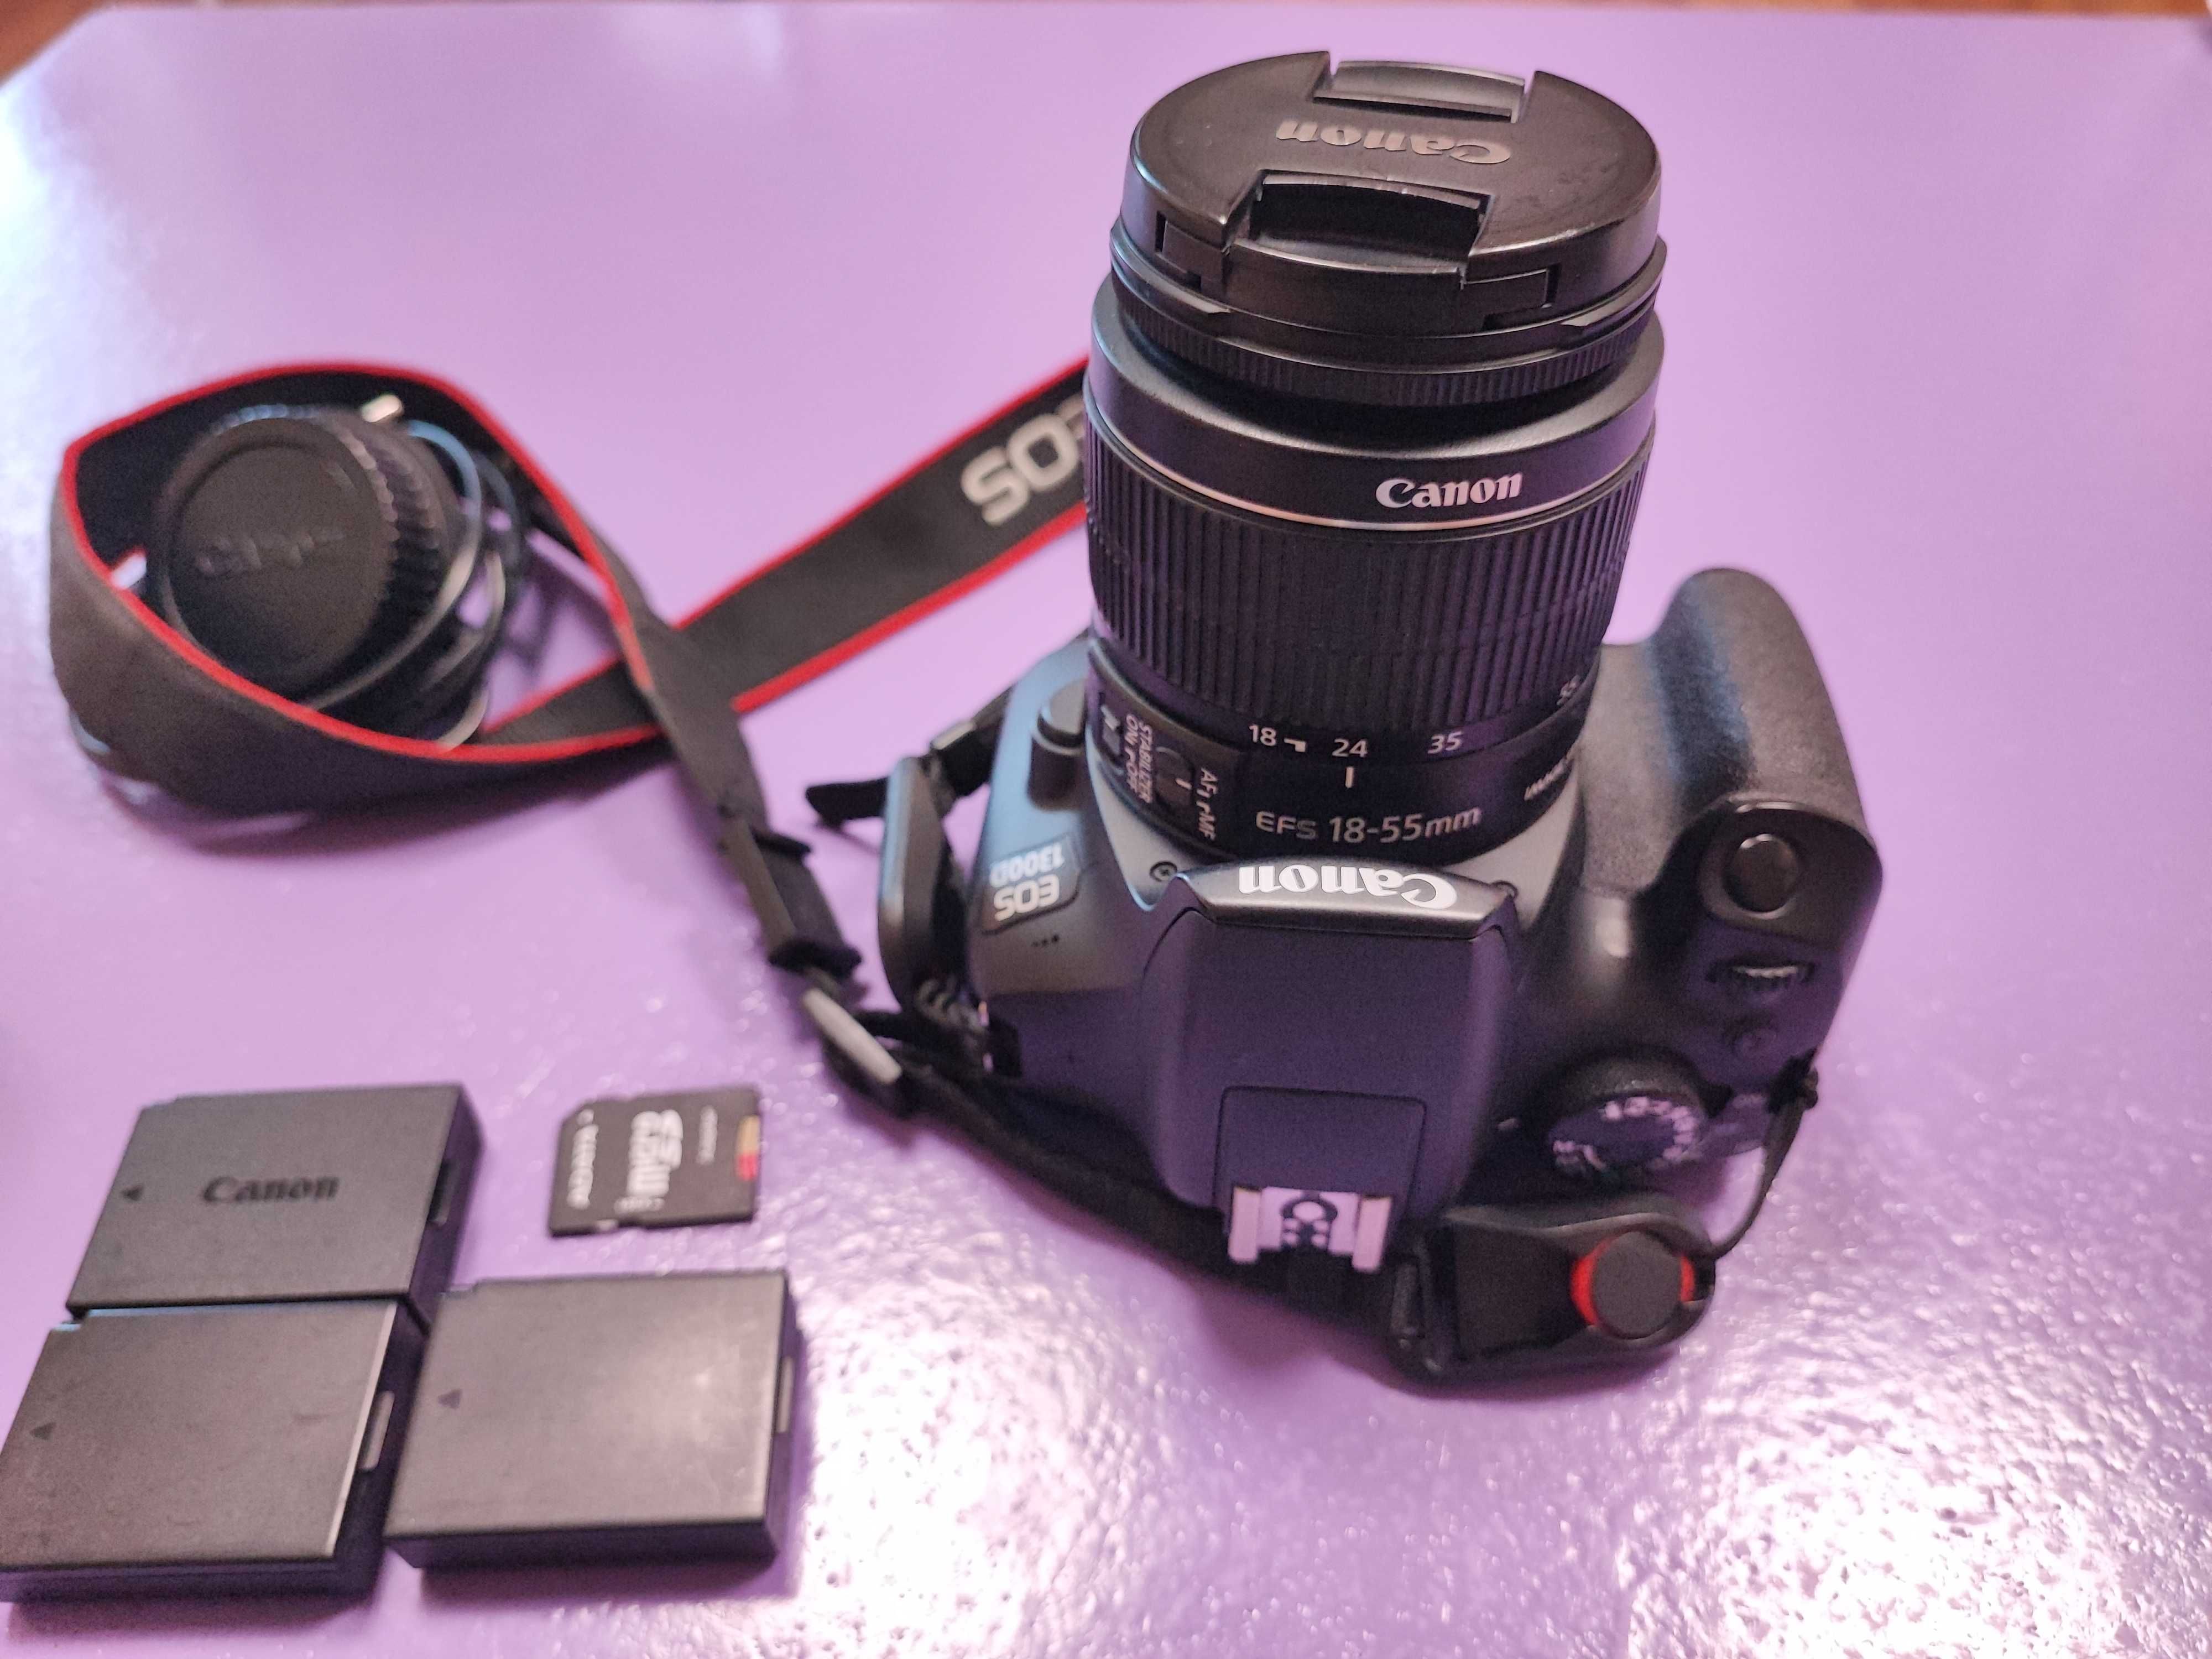 DSLR Камера / Фотоапарат Canon EOS 1300D